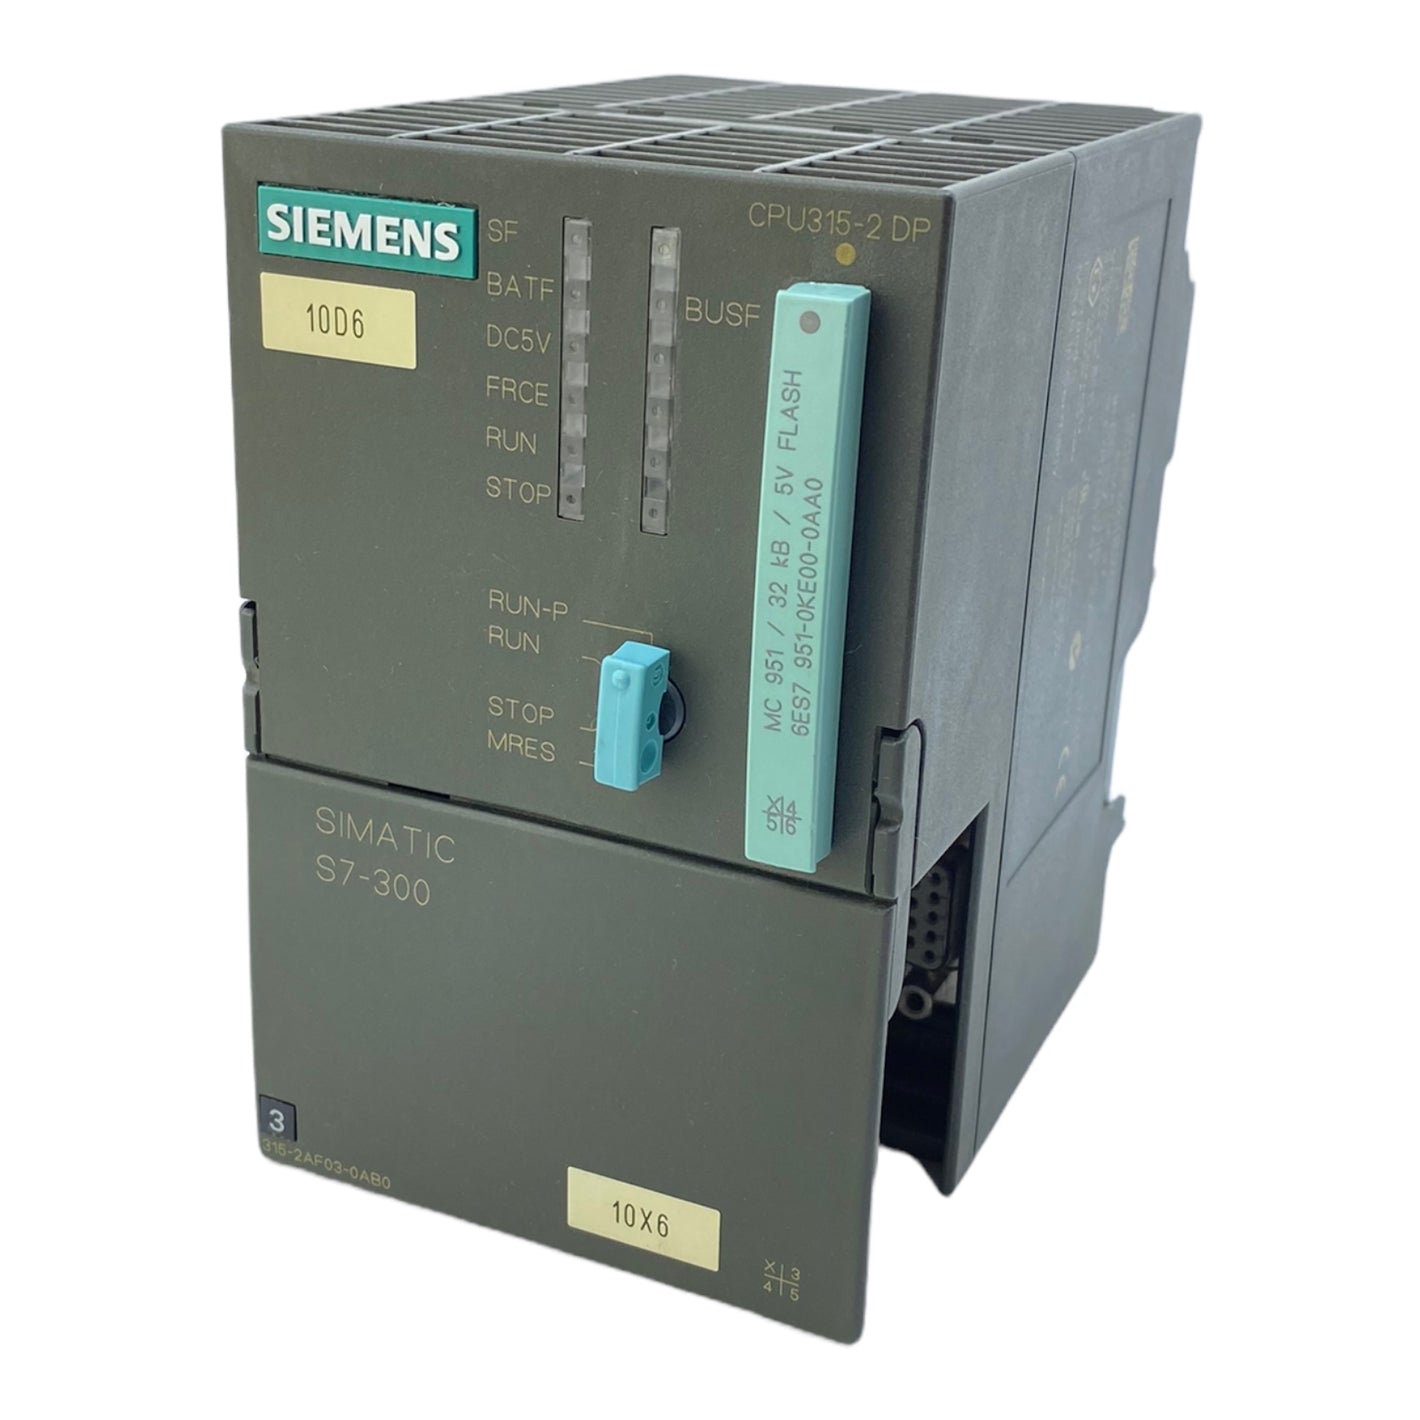 Siemens 6ES7315-2AF03-0AB0 PU315-2DP CPU with integ. power supply 